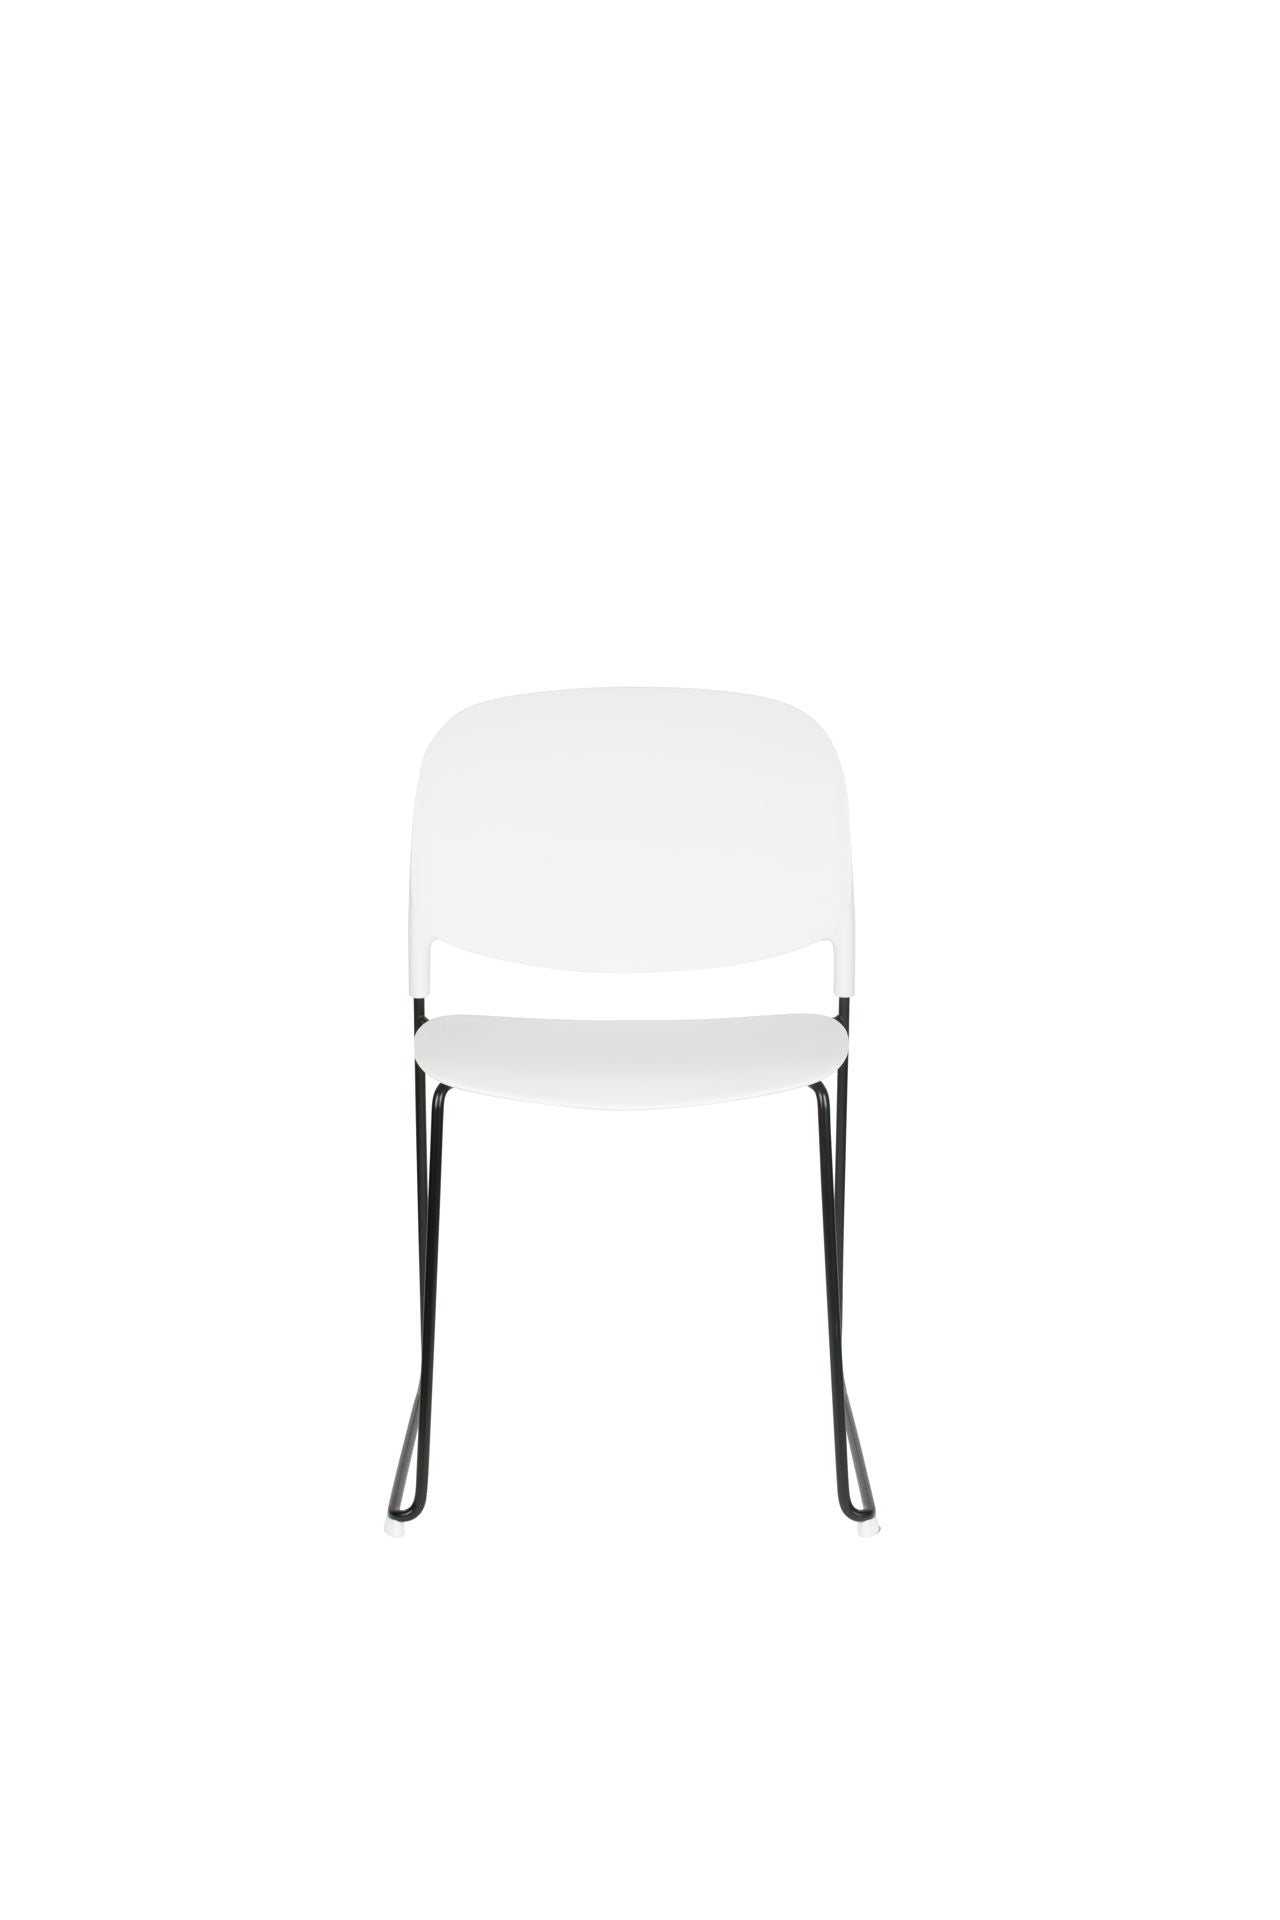 Nancy's San Sebasti n Chair - Retro - White, Black - Polypropylene, Steel, Plastic - 52.5 cm x 48.5 cm x 80 cm